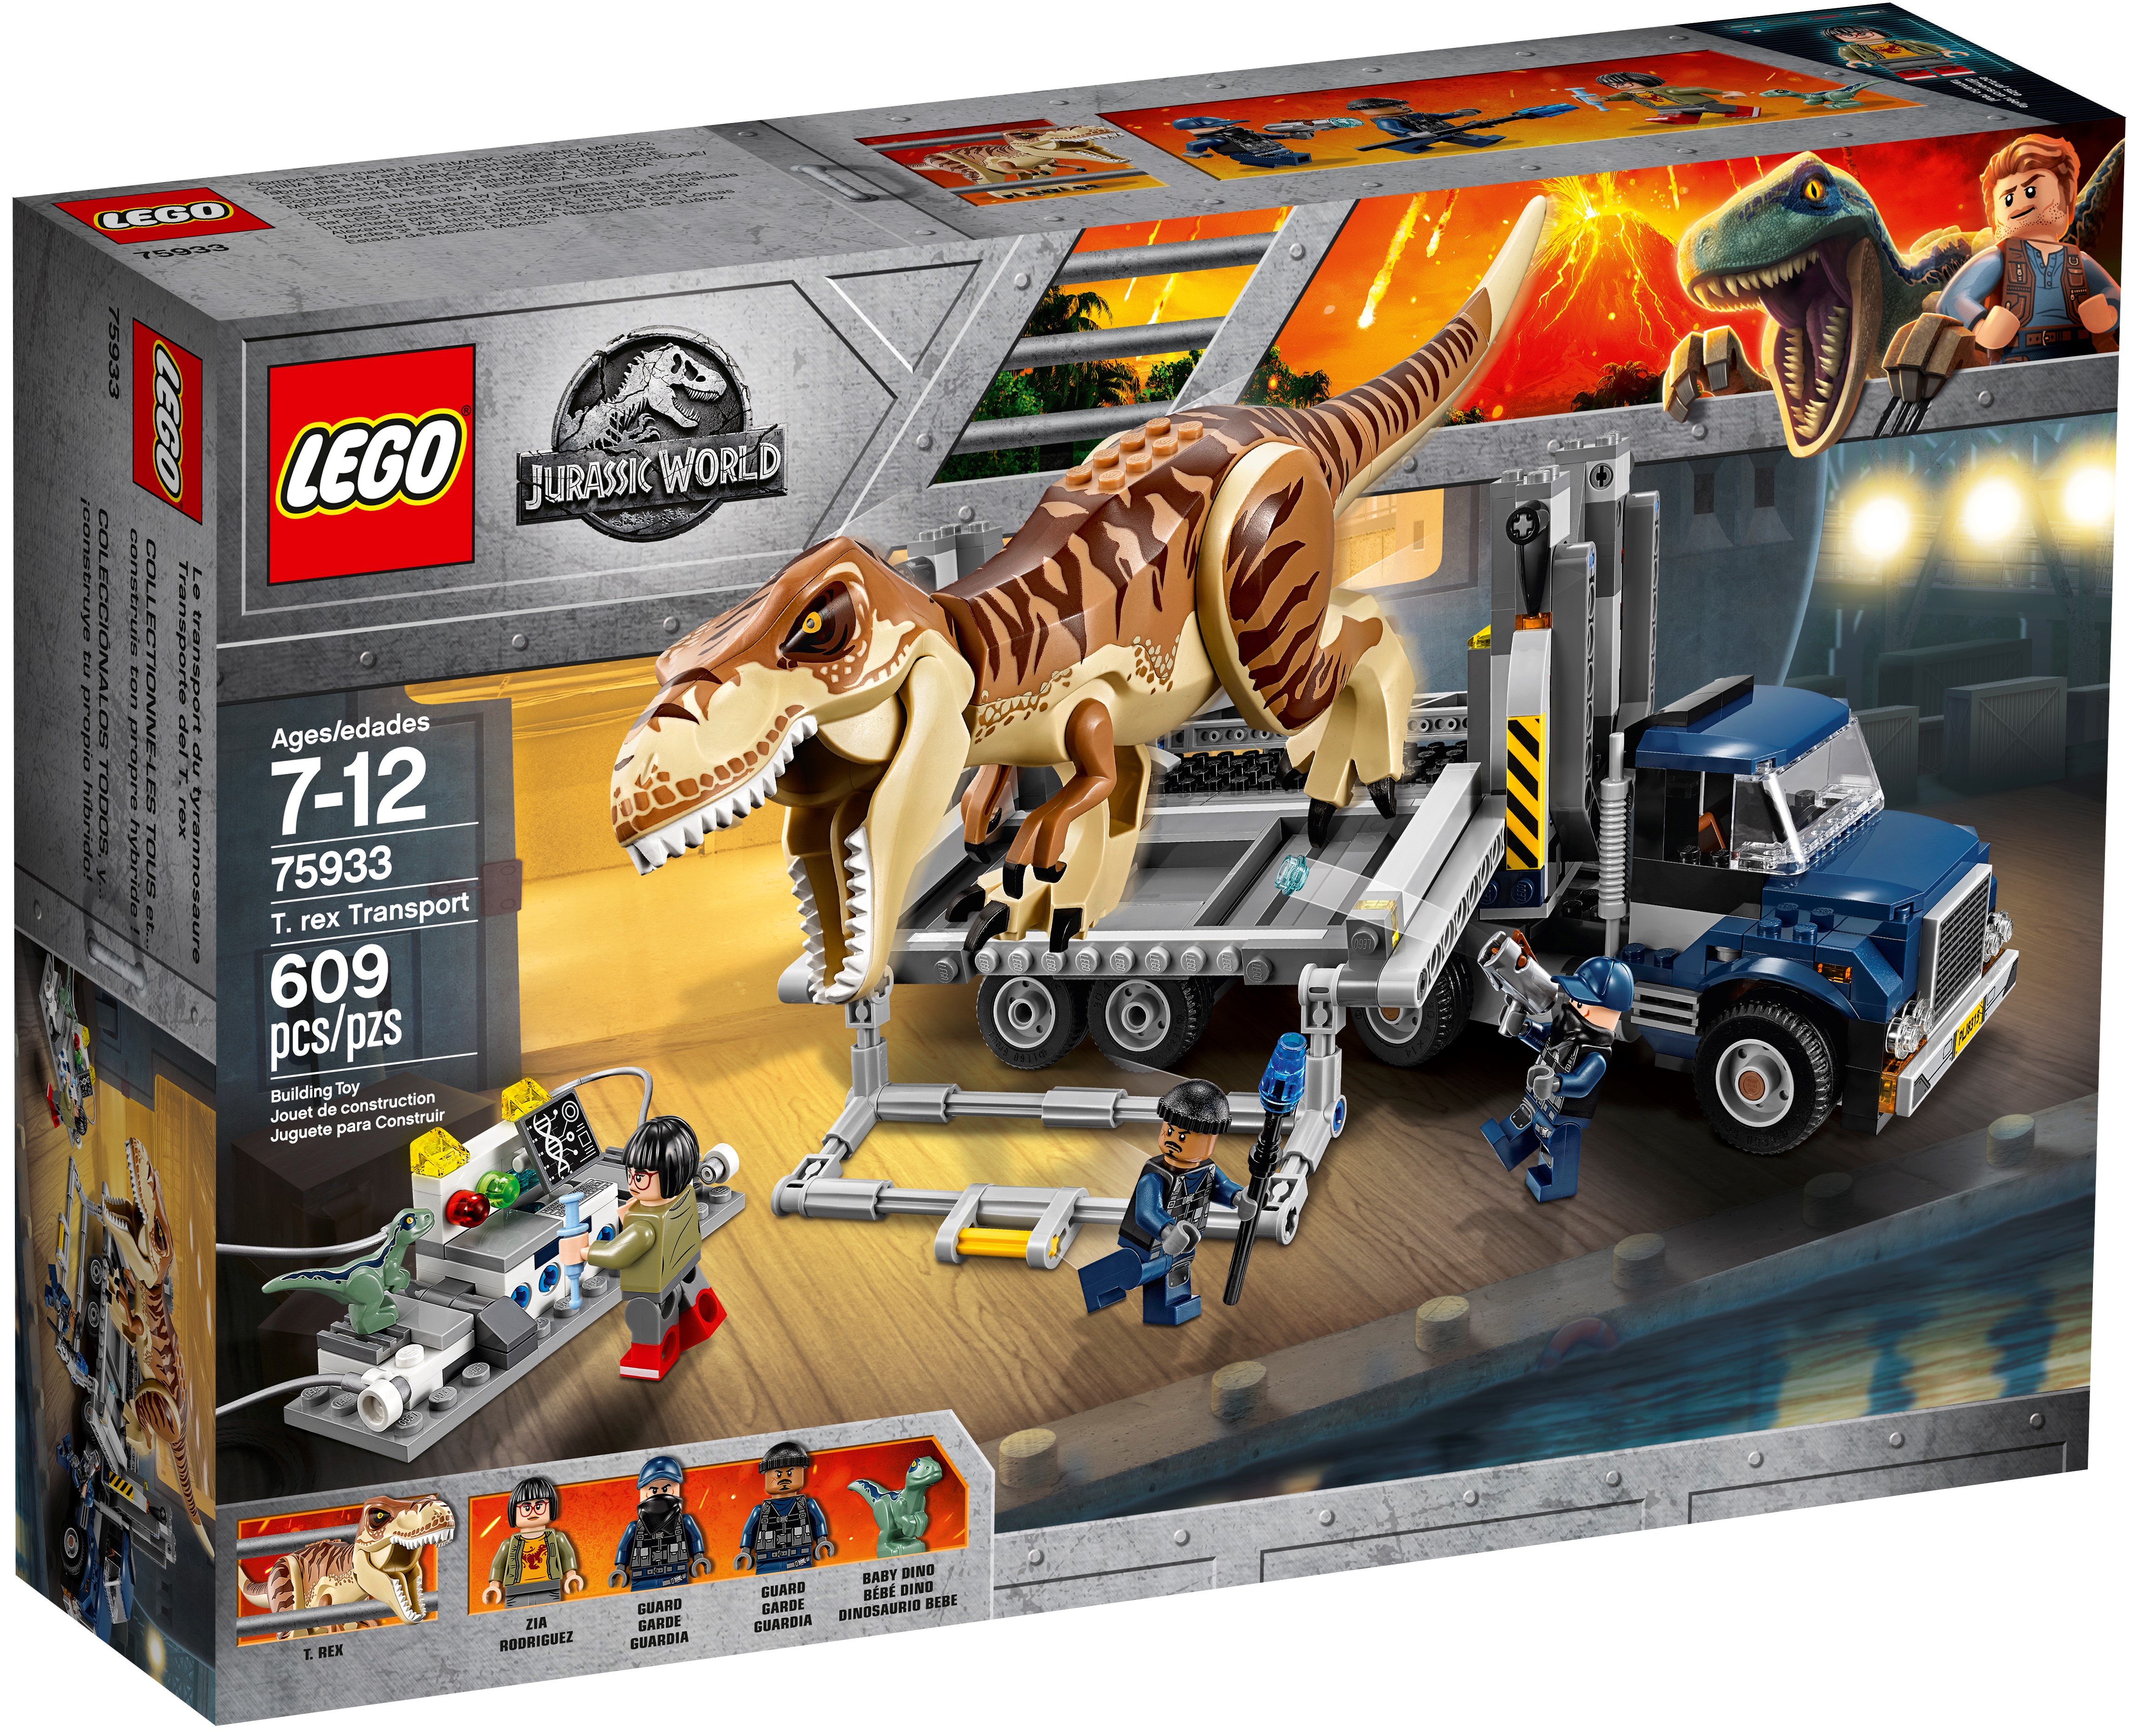 T. rex Transport 75933 | Jurassic World™ | Buy online at the LEGO® Shop US